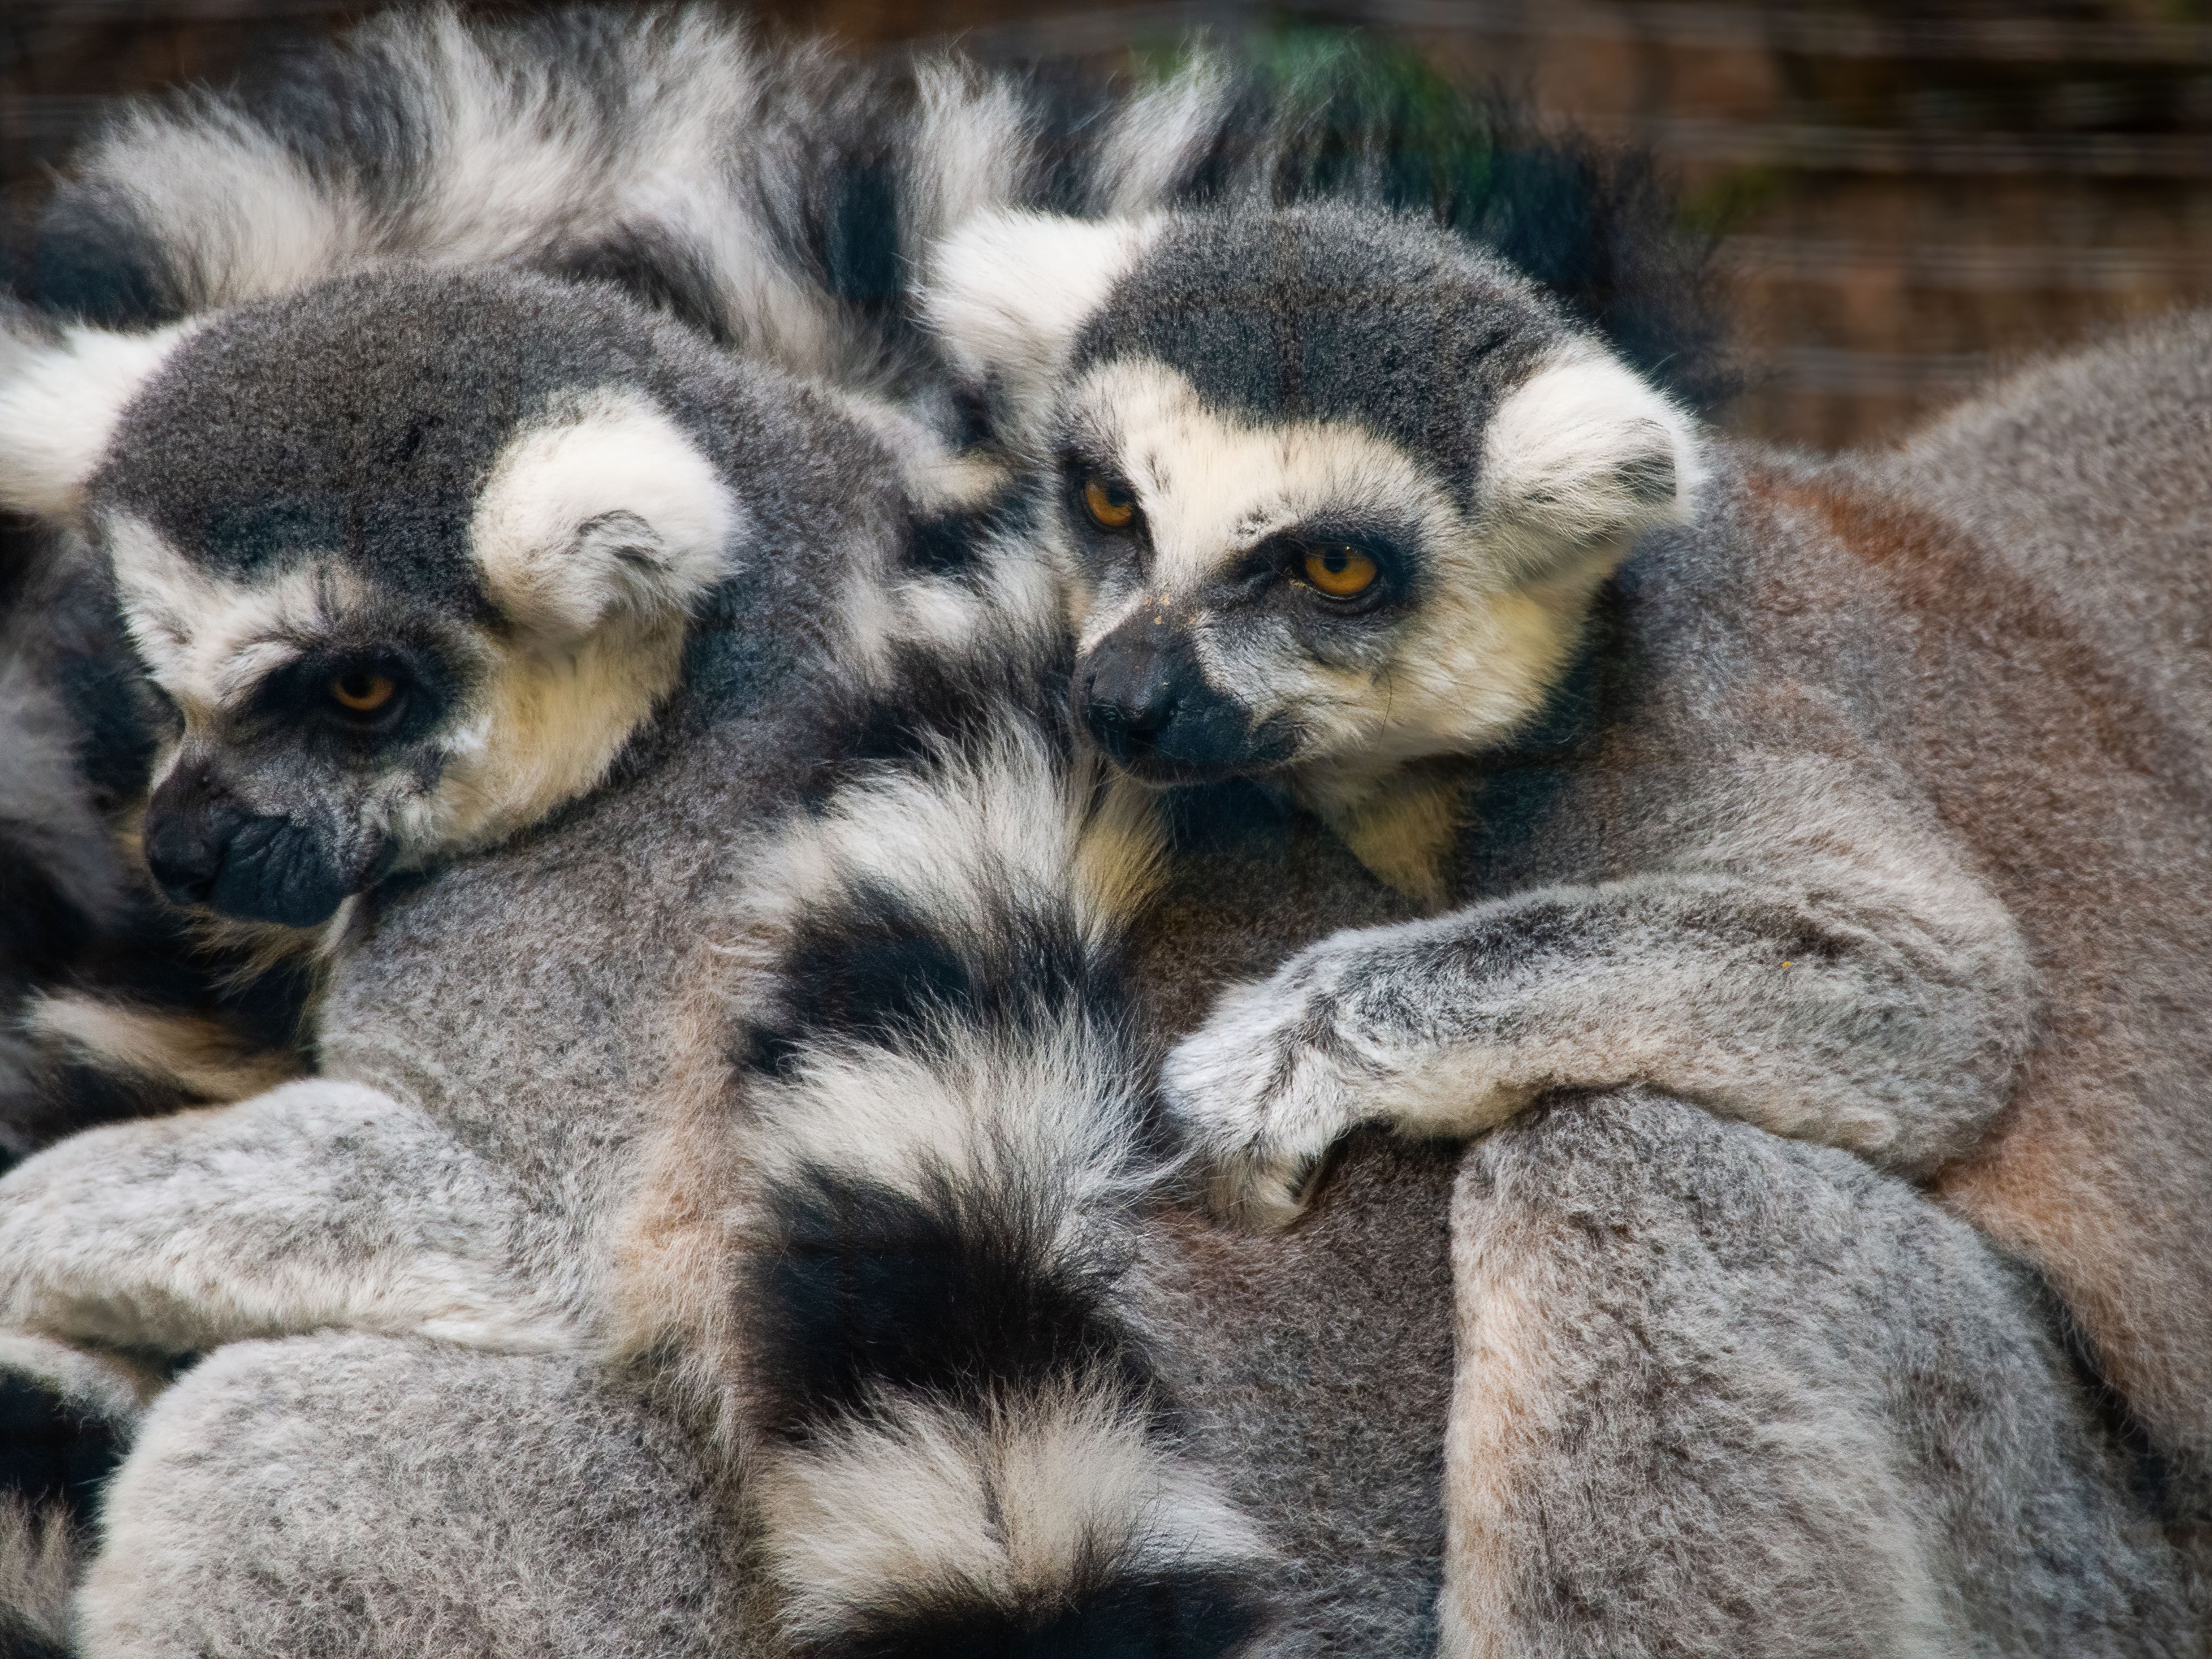 Family of ring-tailed lemurs